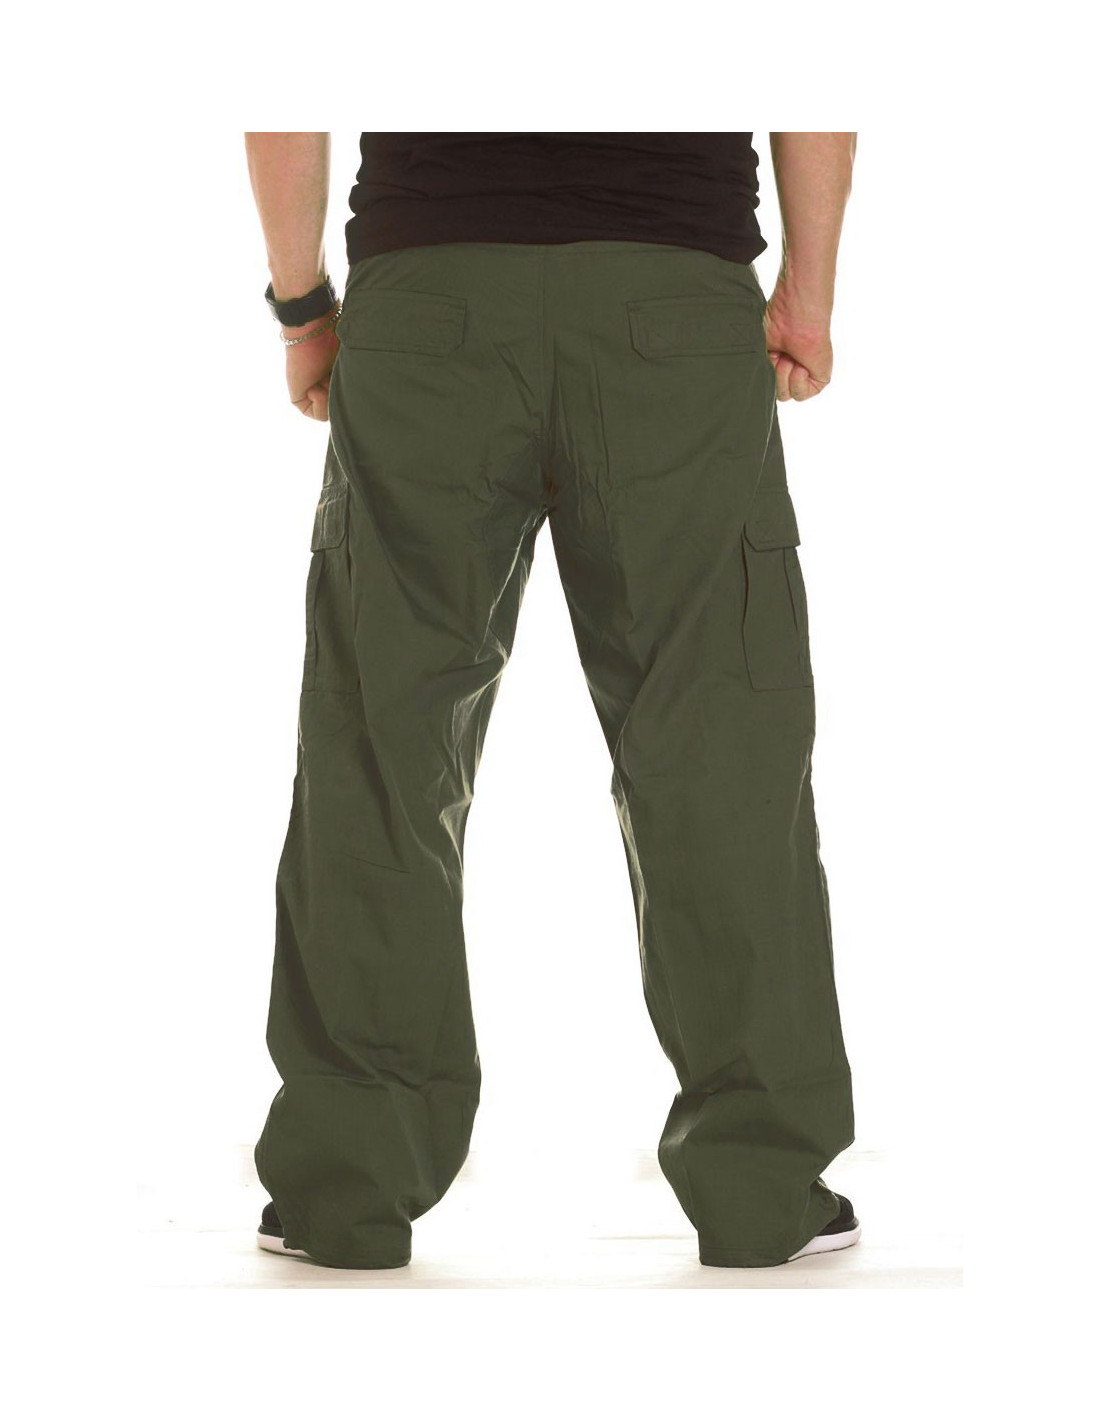 BSAT Combat Cargo Pants Olive Baggy